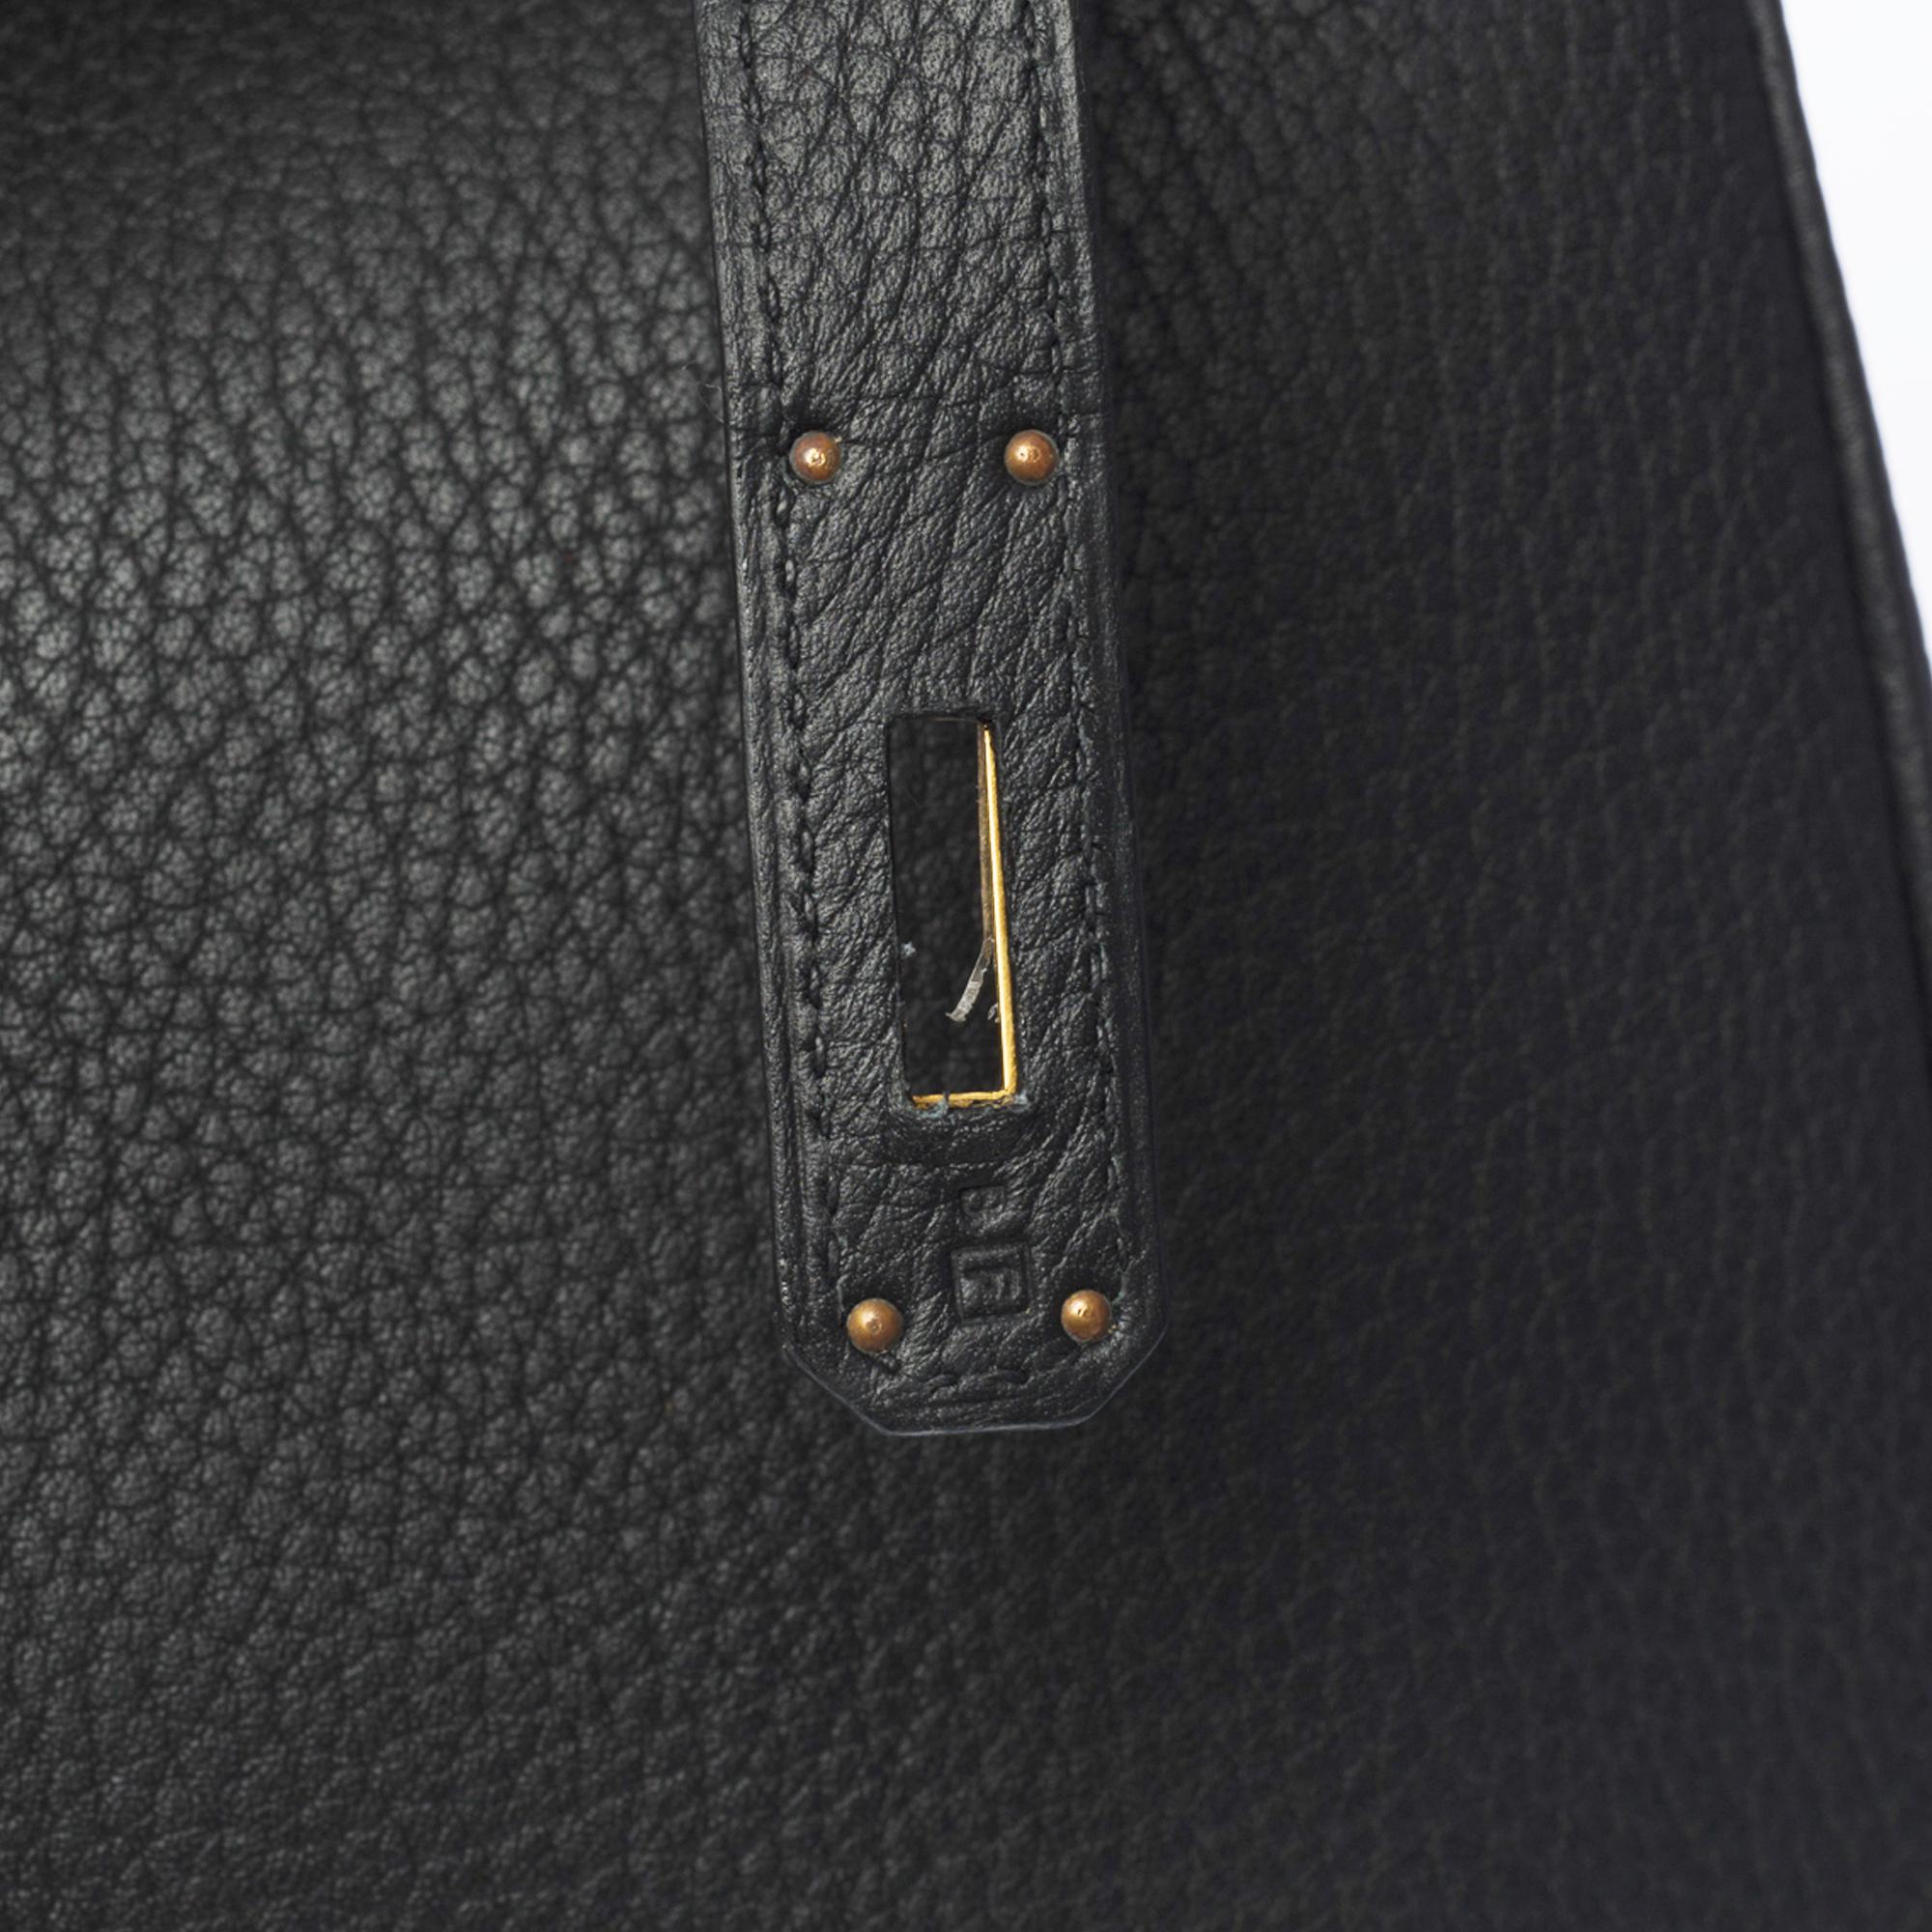 Stunning Hermes Birkin 40cm handbag in Black Togo leather, GHW 3